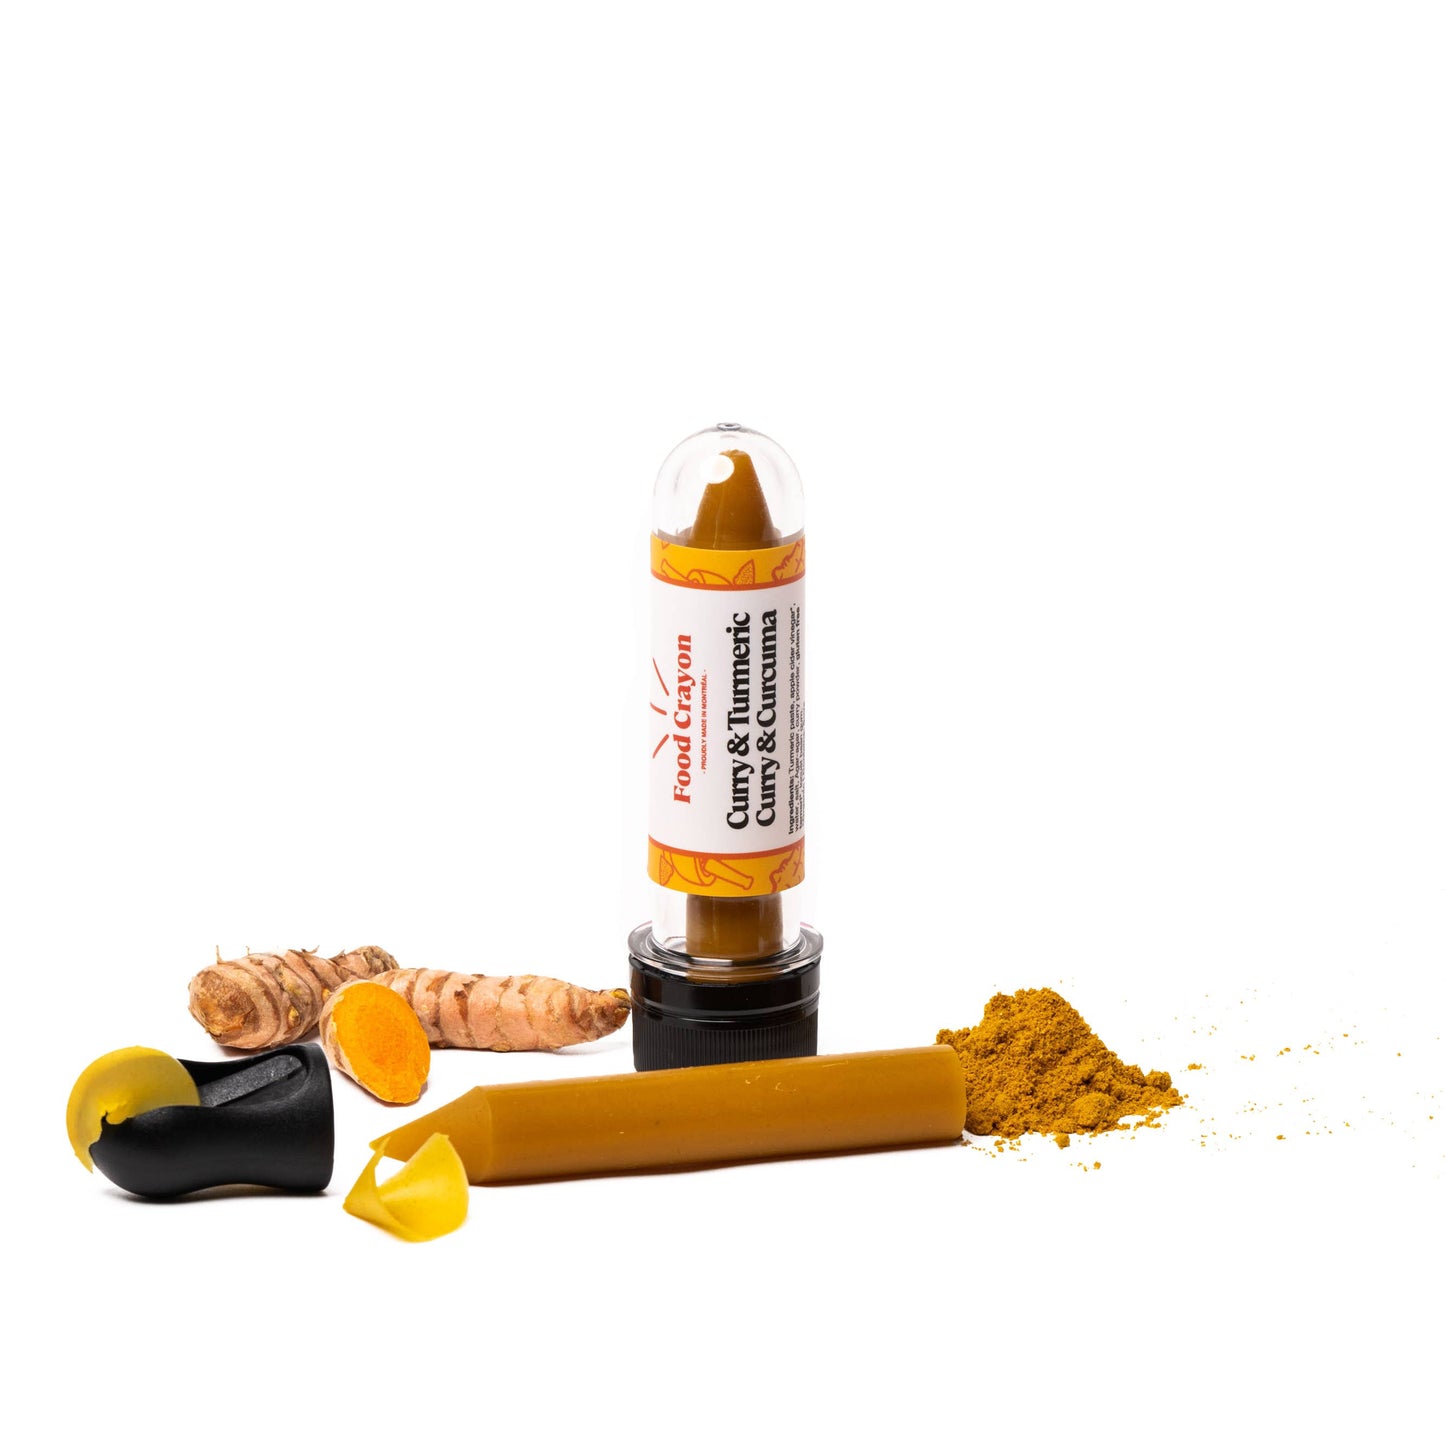 Food Crayon - Curry & Turmeric - Single Box (1 Food Crayon + 1 Sharpener)